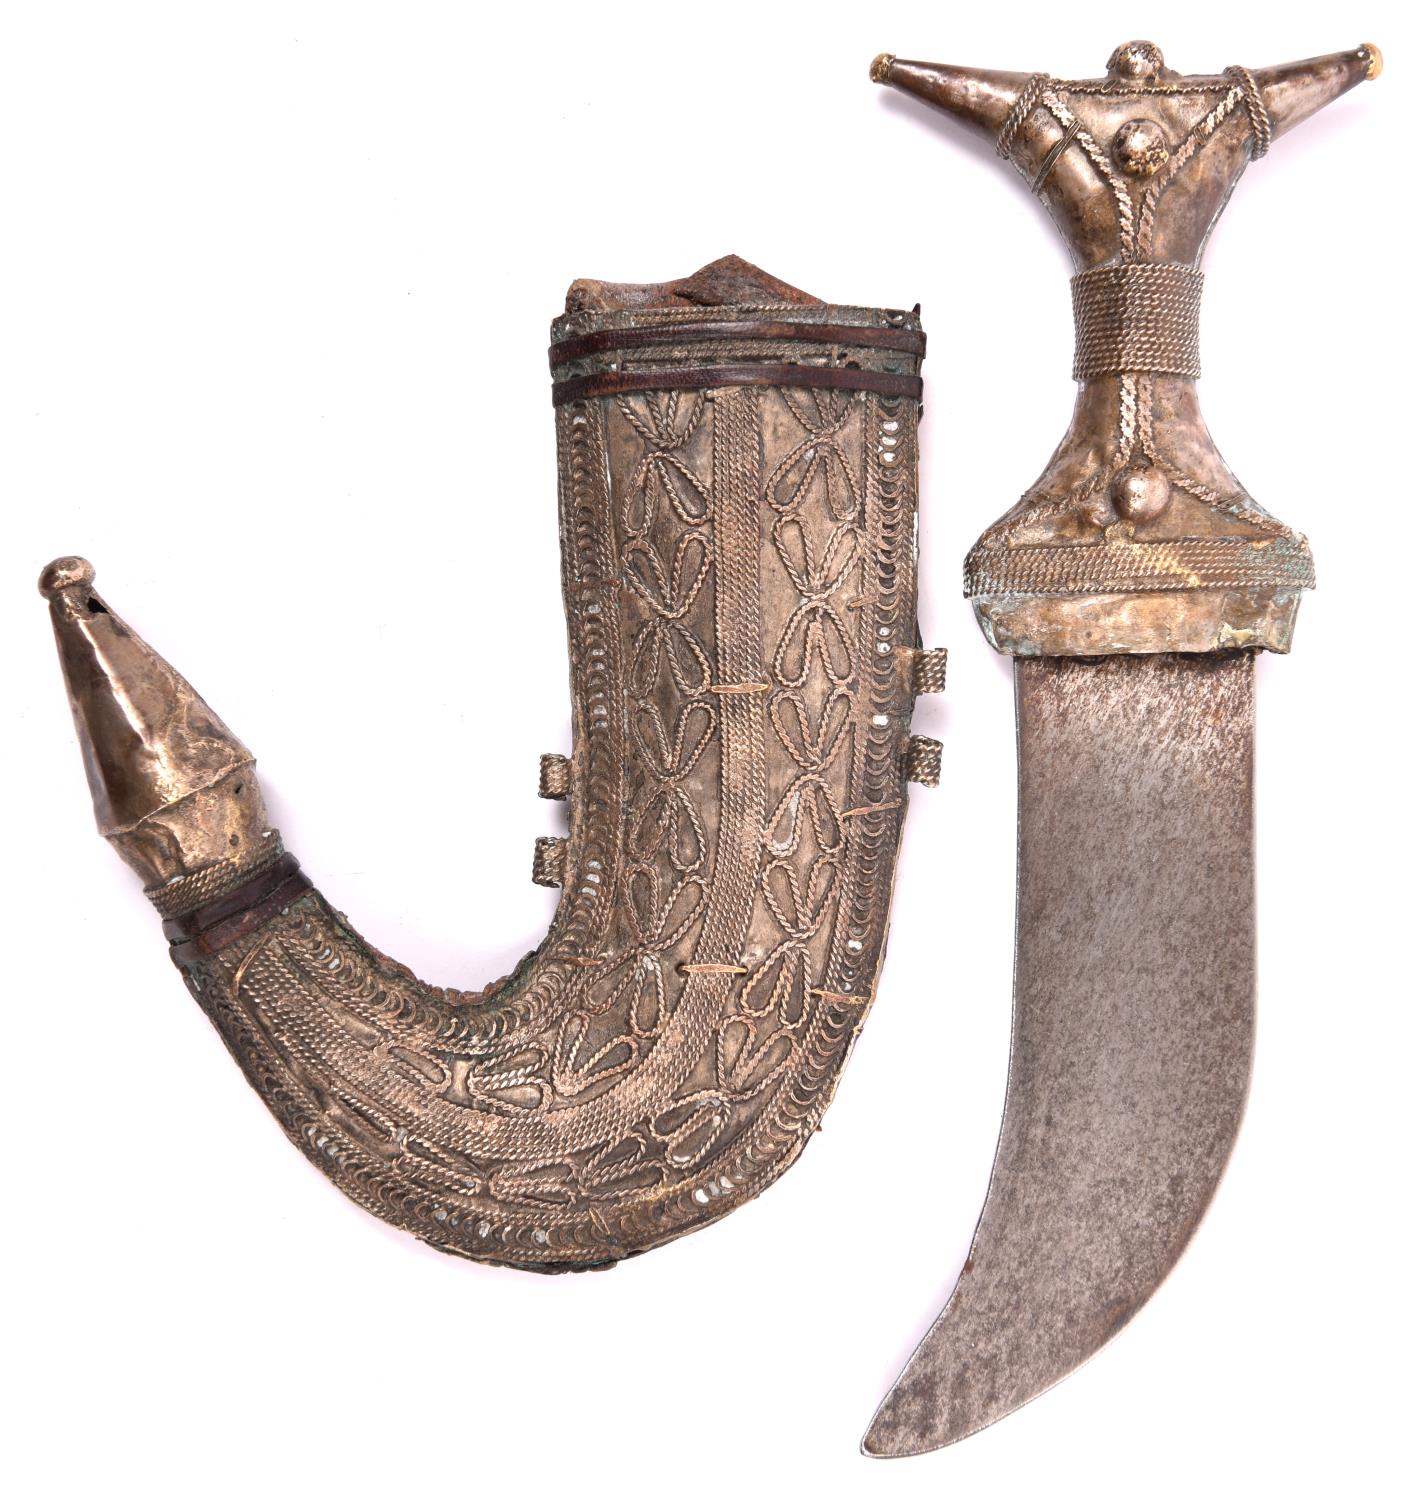 An Arab child's jambiya, flat blade 4", the hilt and sheath of white metal with filigree